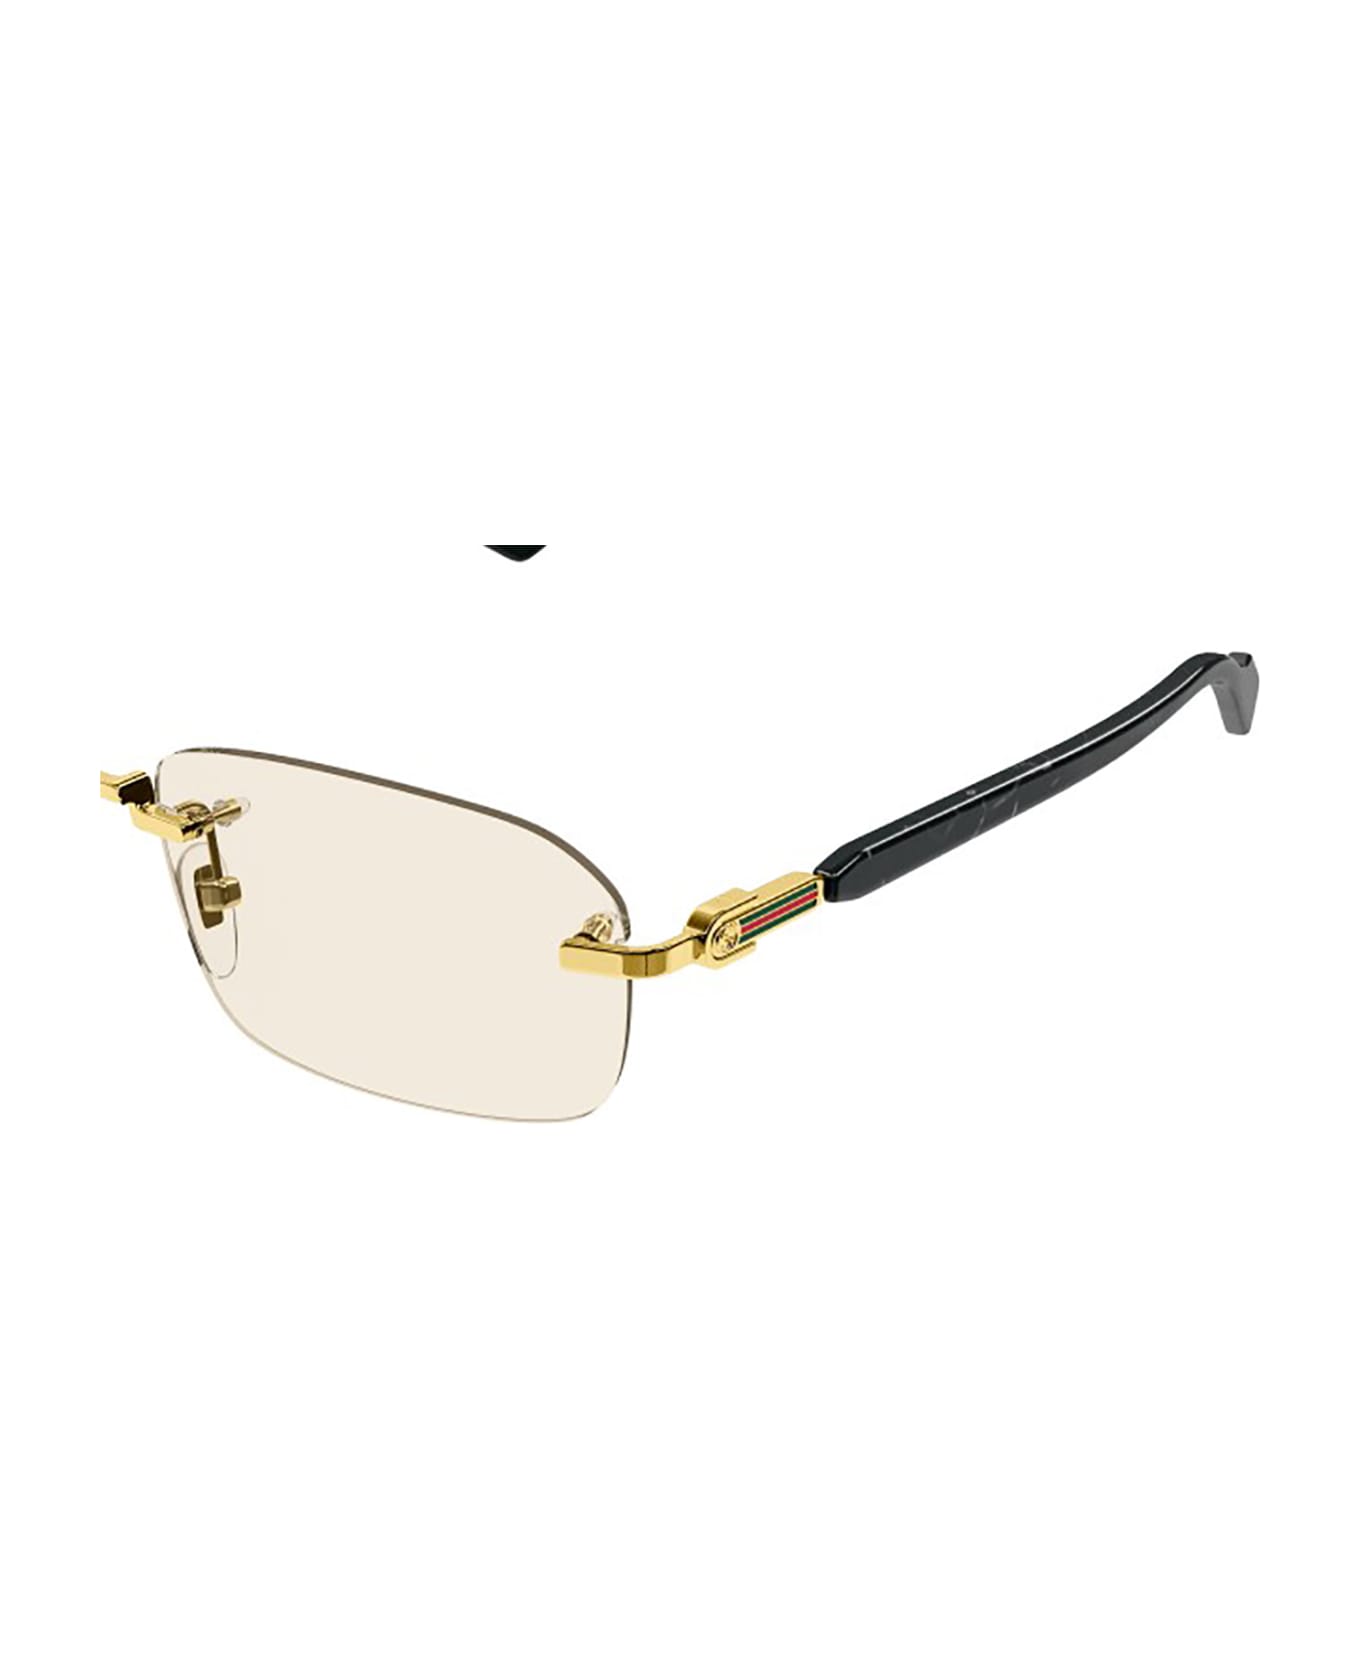 Gucci Eyewear Gg1221s Sunglasses - 005 gold black yellow